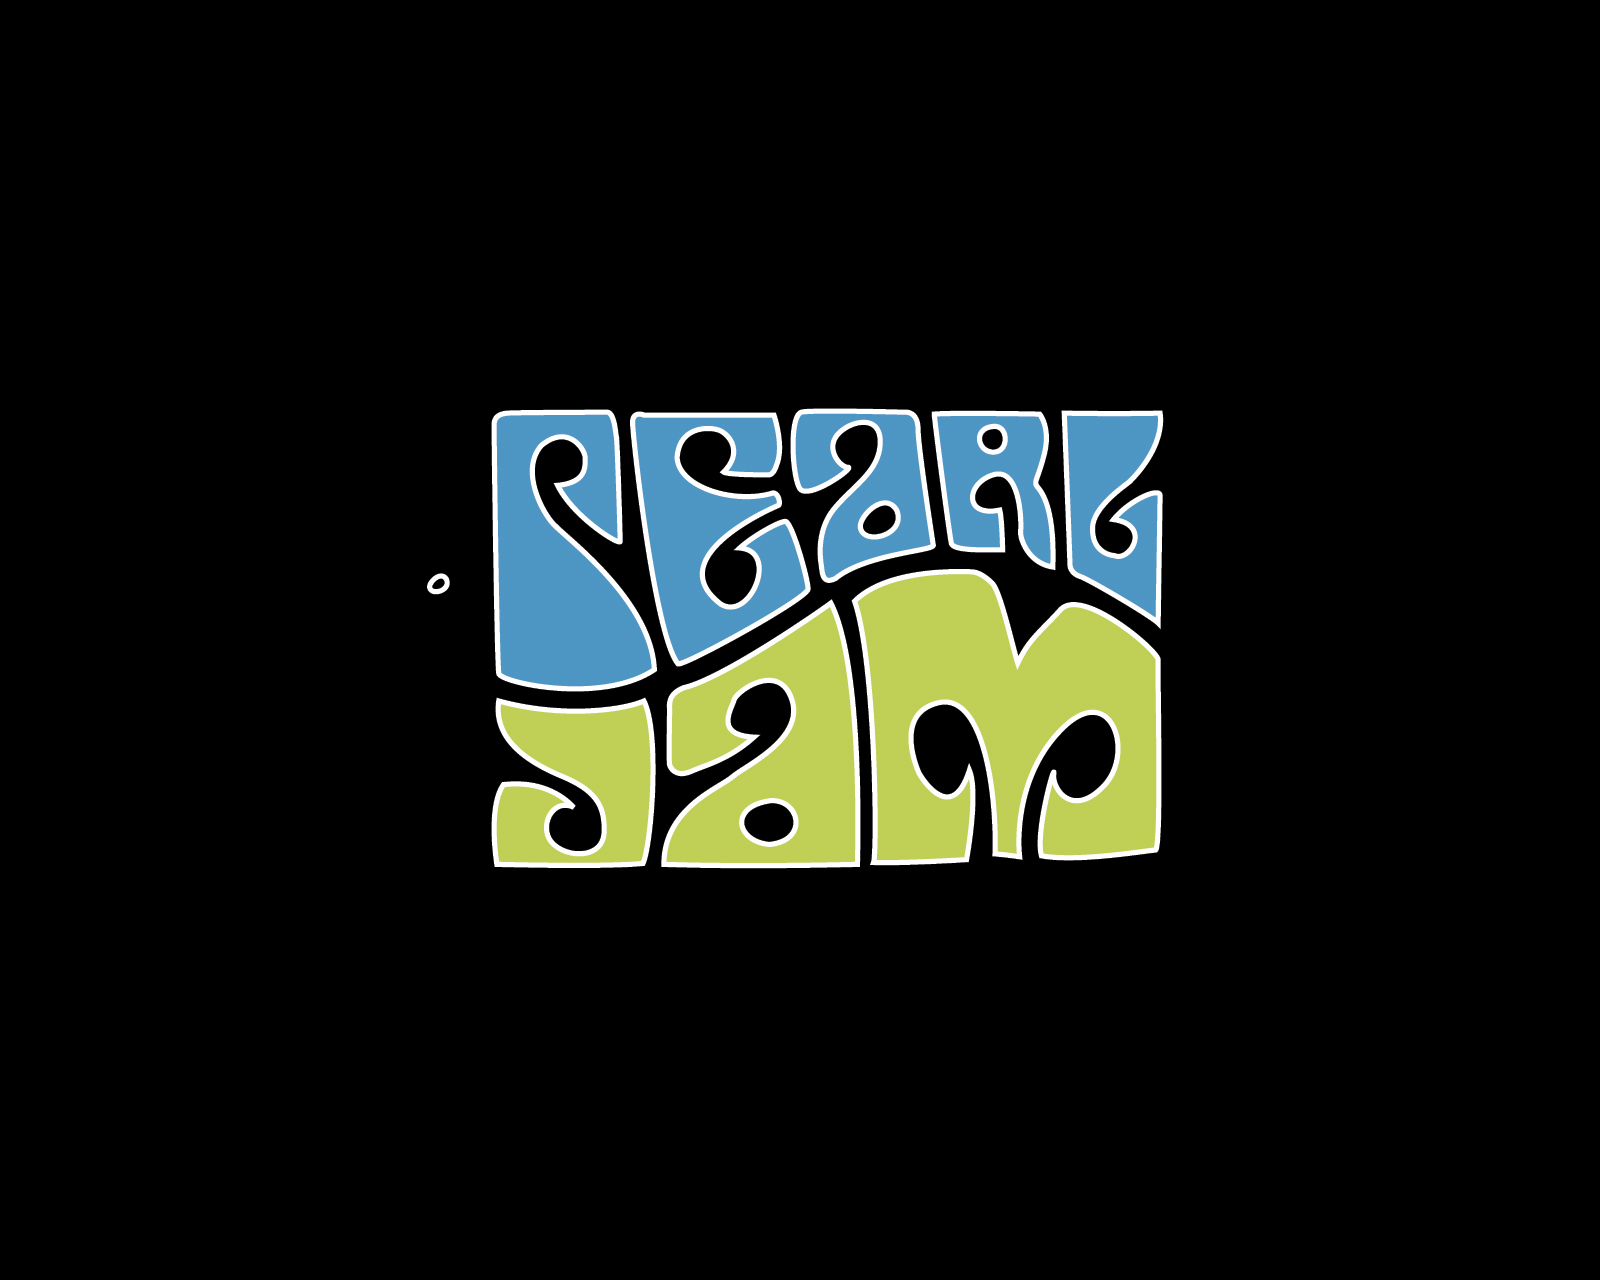 Pearl Jam Band Logo